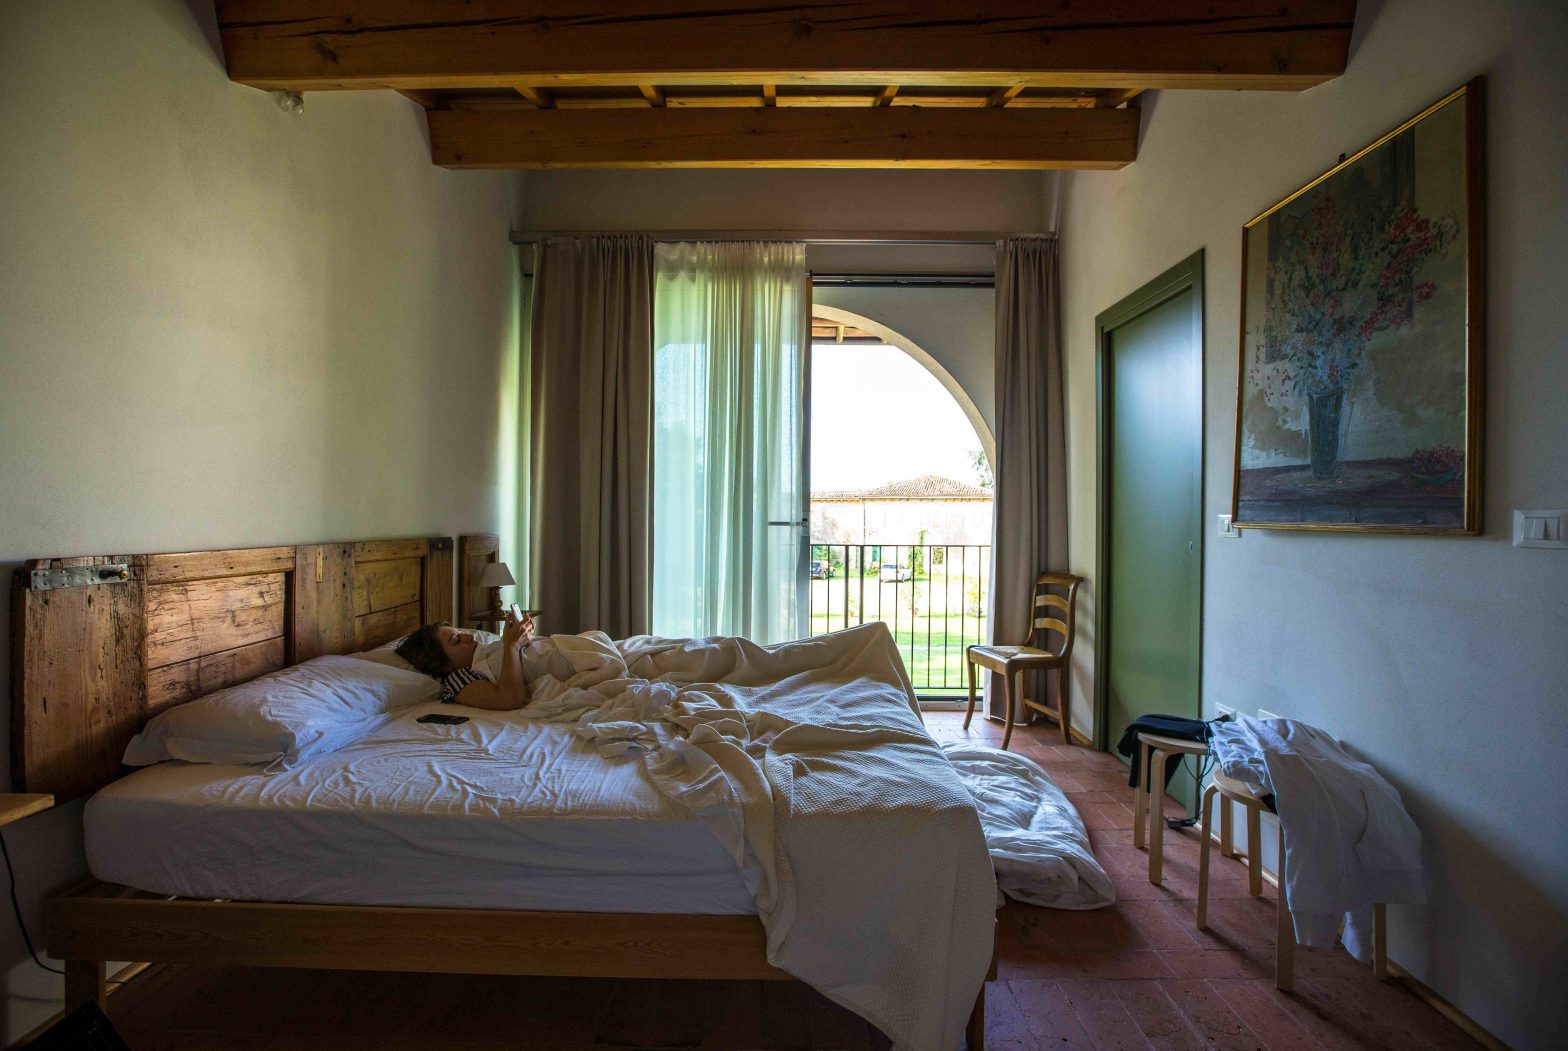 tuscany suites casino las vegas bed bugs